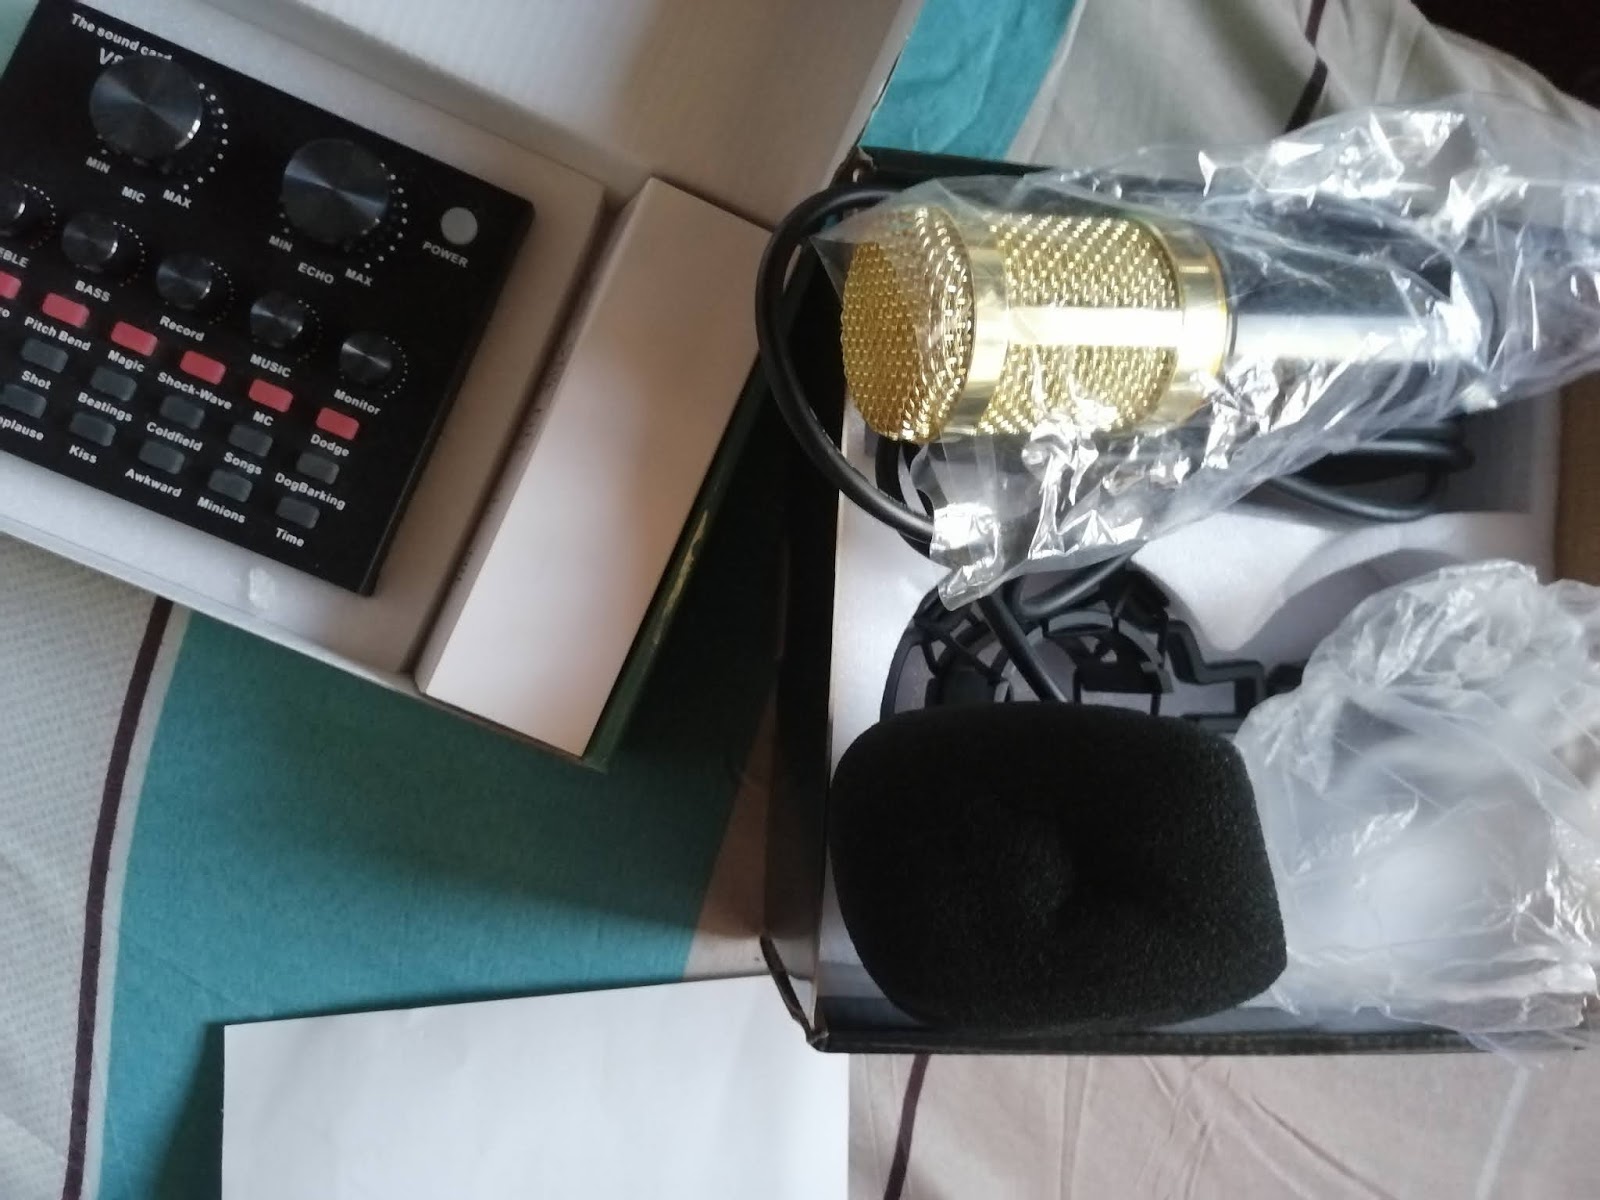 V8 sound card and BM800 condenser mic up for barter by life blogger Teresa Gueco